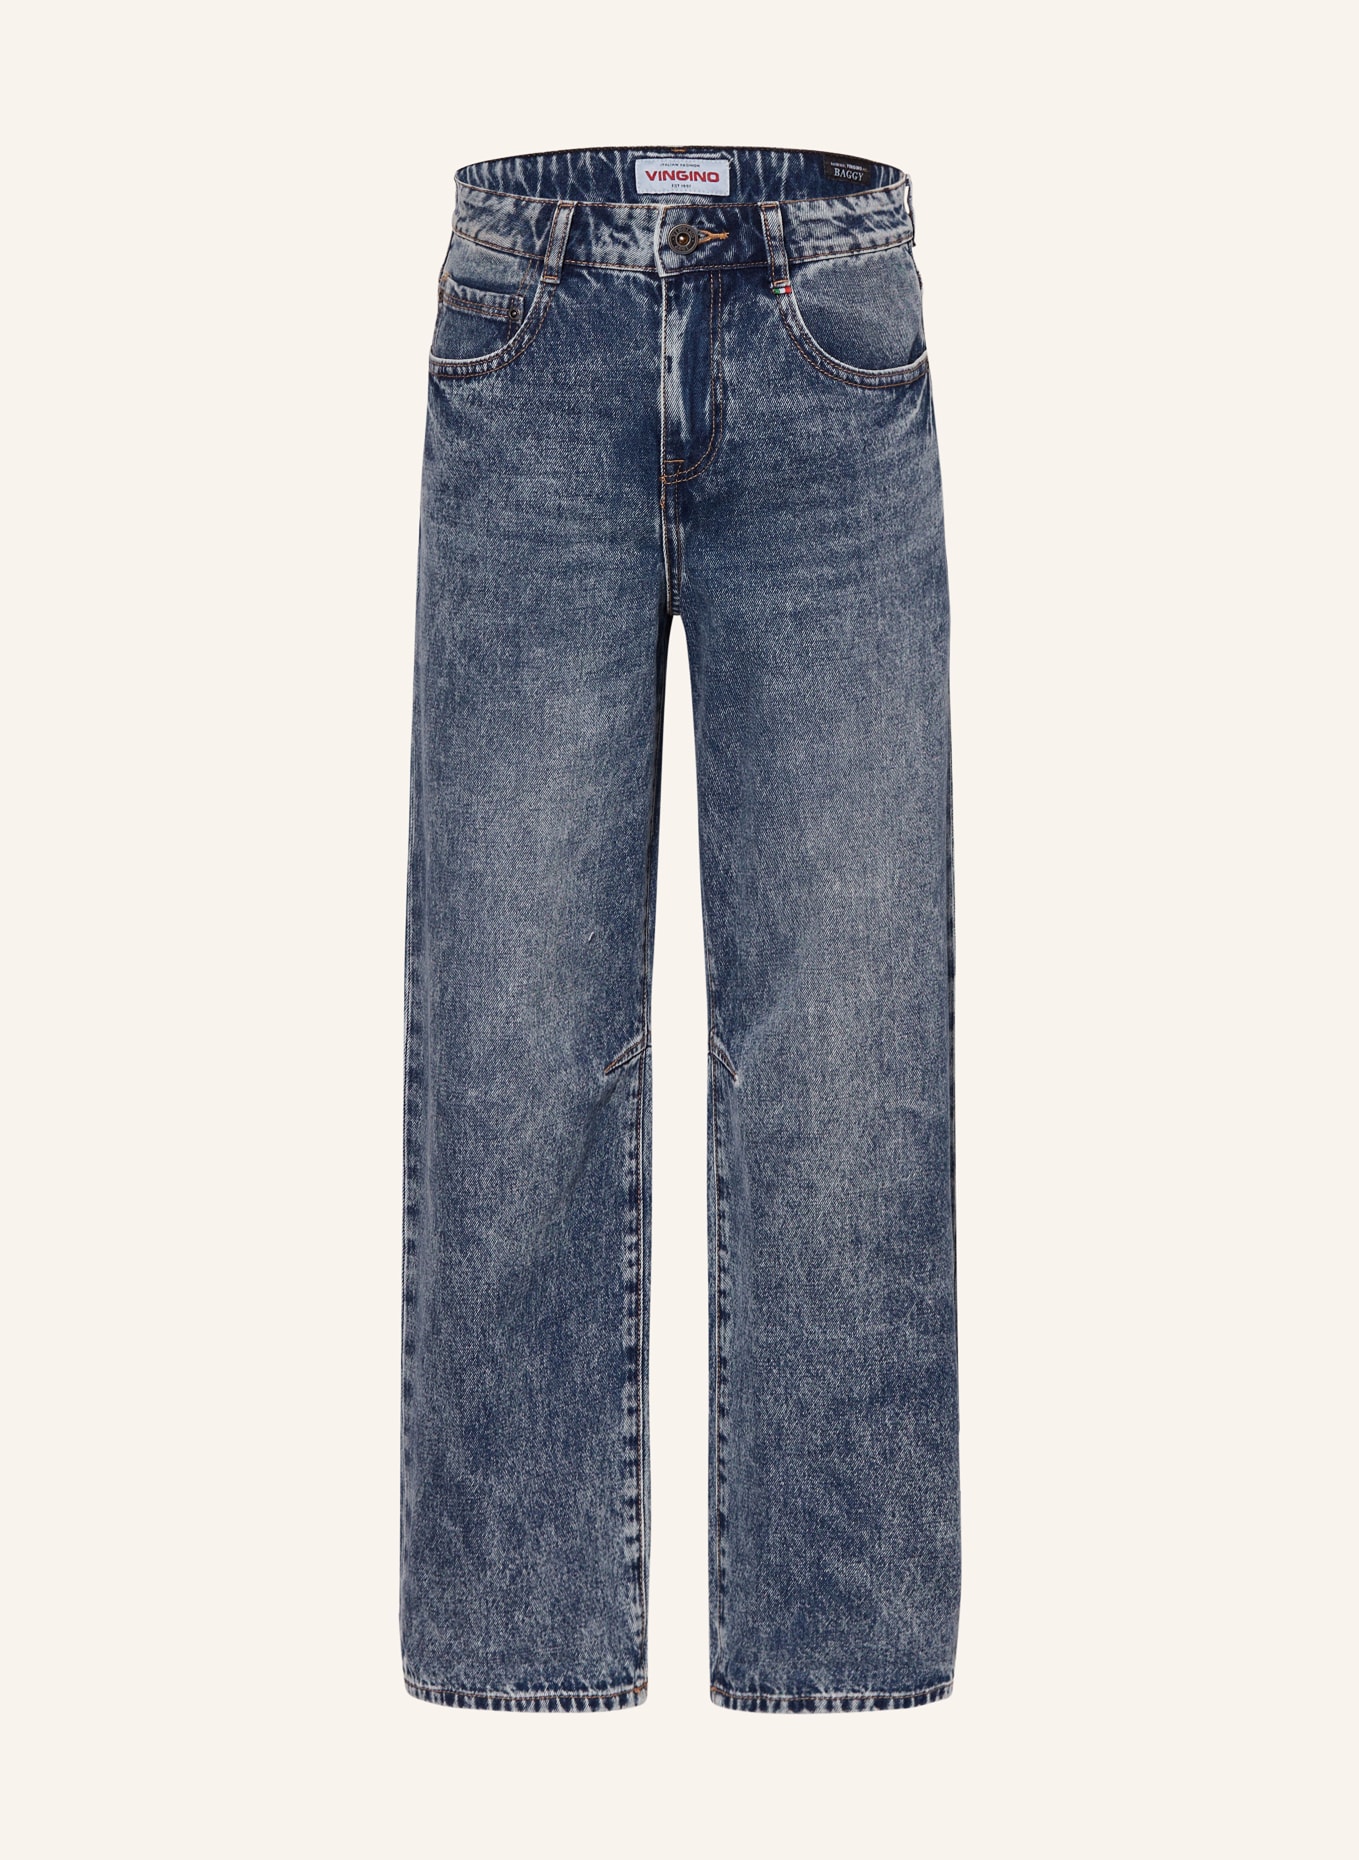 VINGINO Jeans VALENTE, Farbe: INDIGO BLUE (Bild 1)